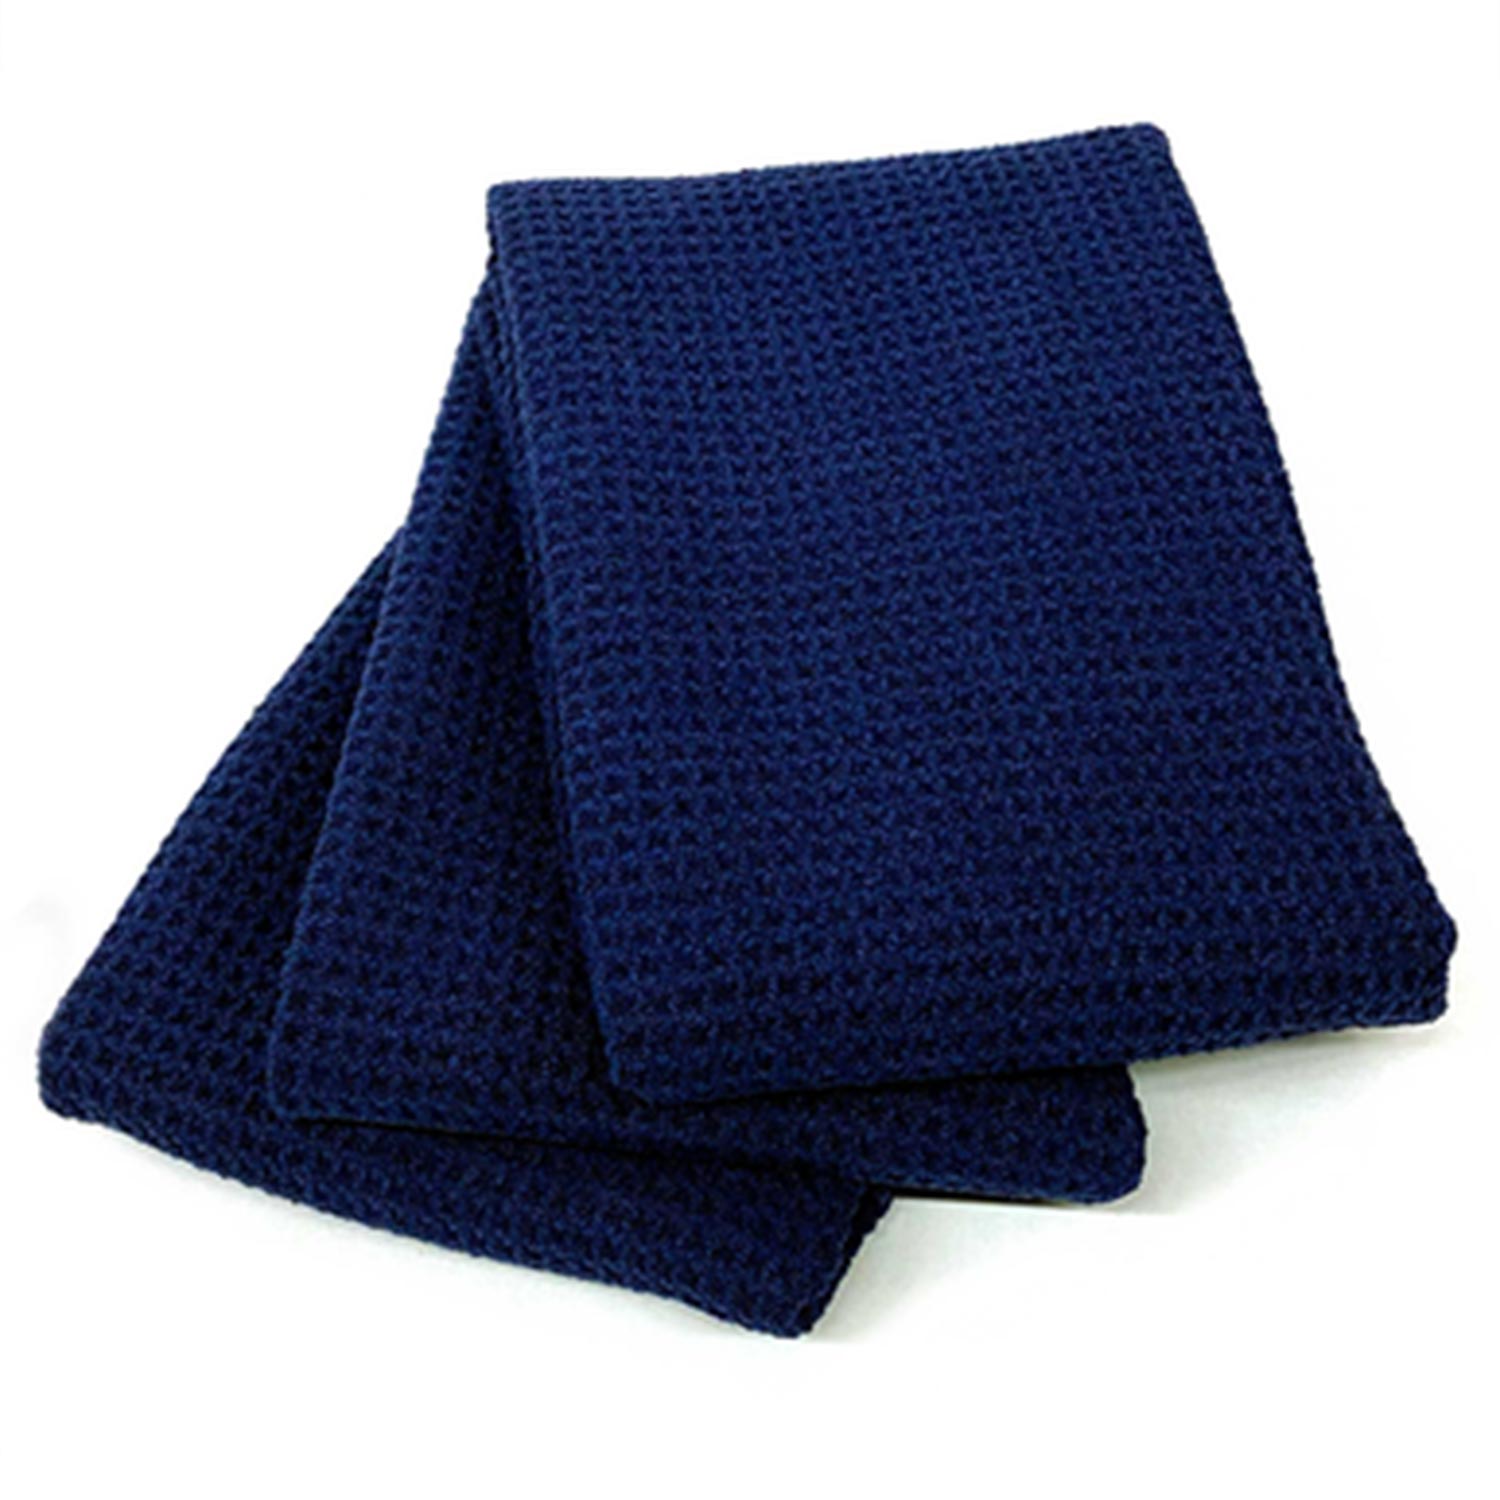 Sm Shammy Cloth - Absorbent Chamois Towel (3pk)